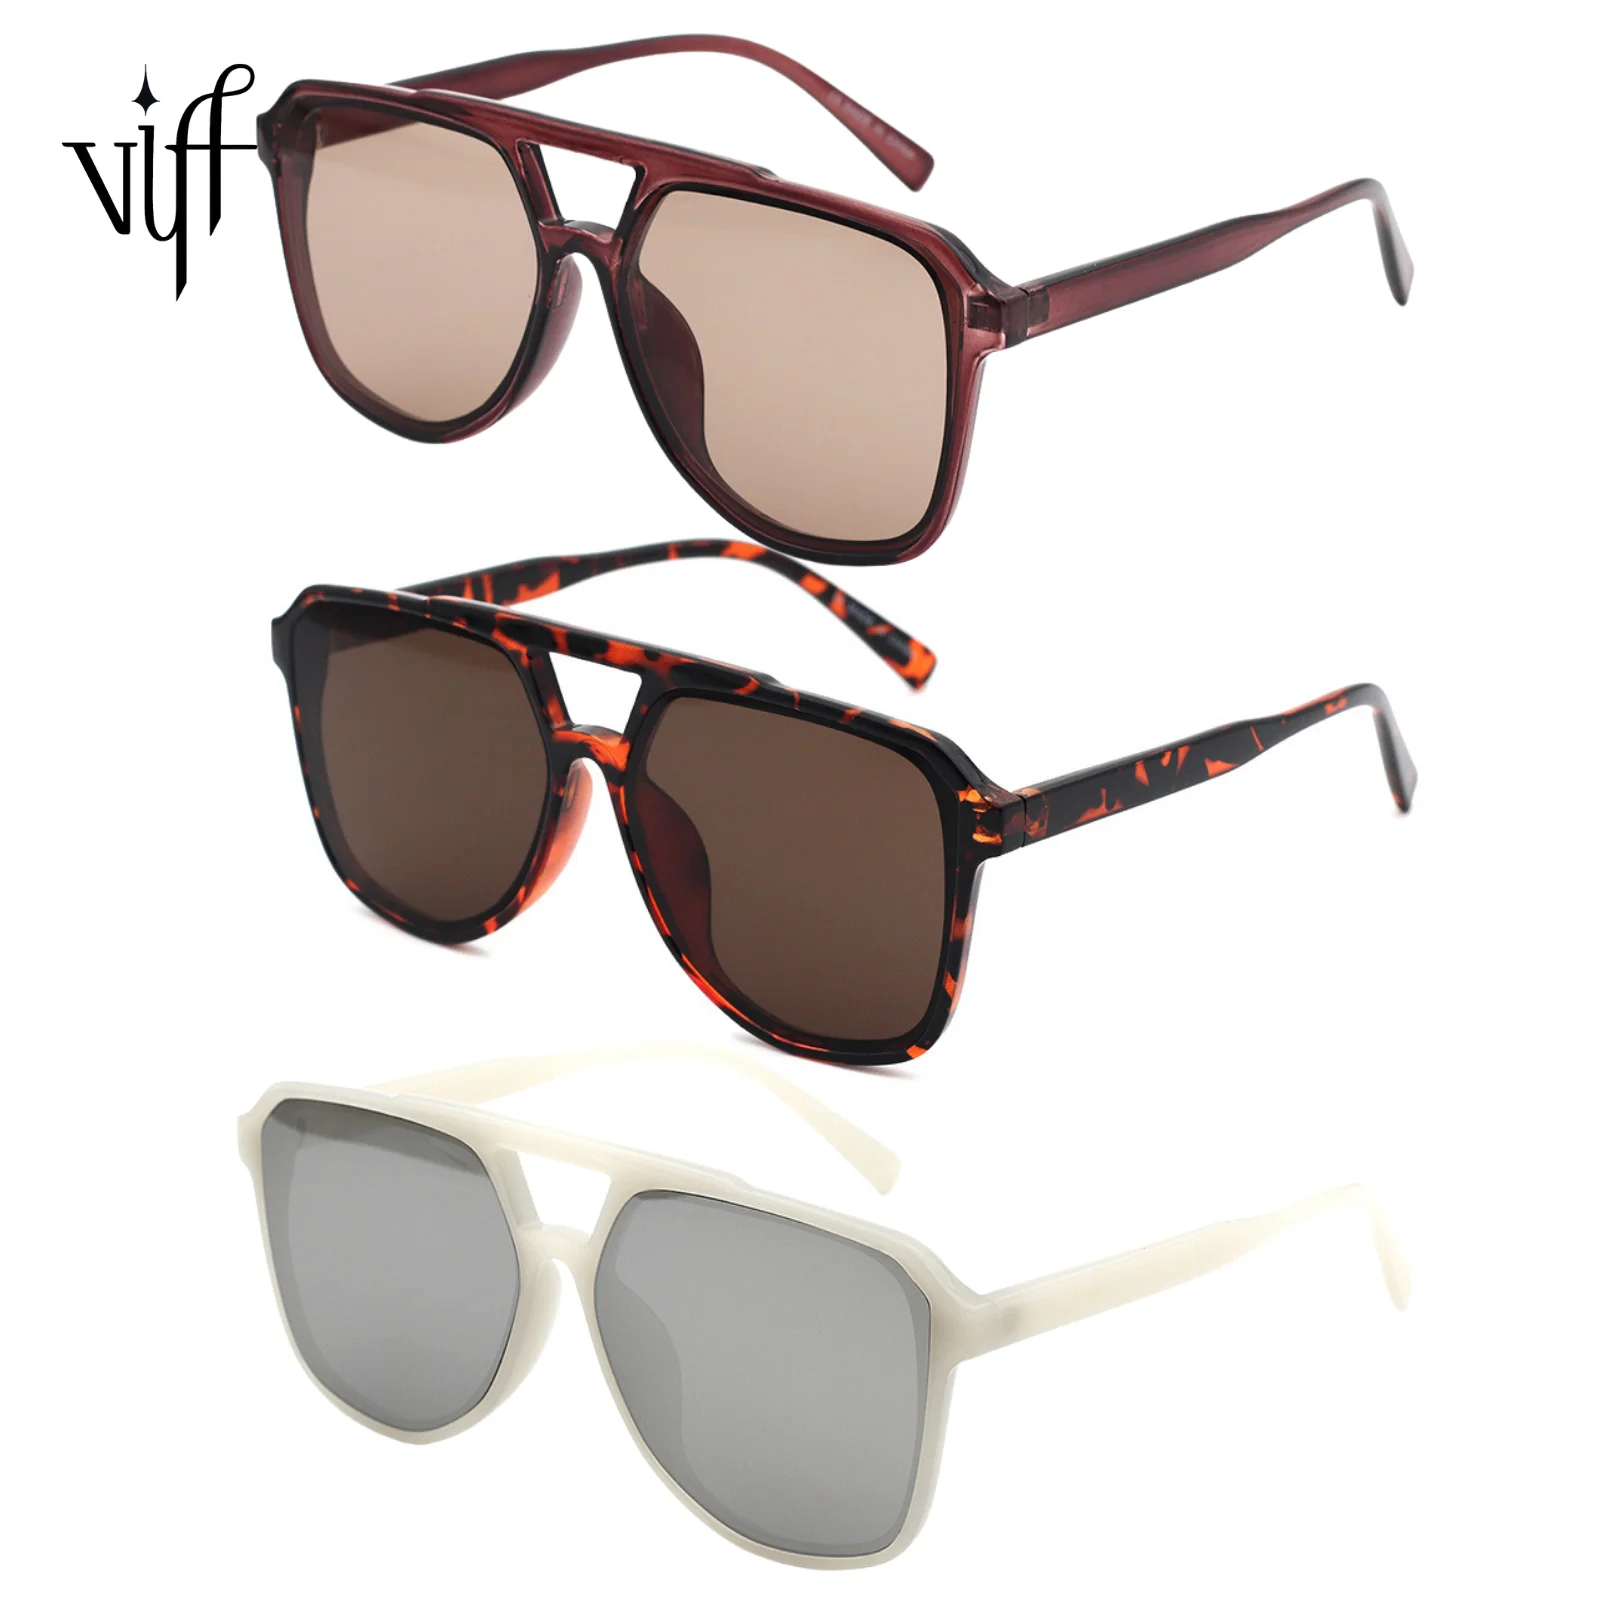 

VIFF HP20333 Square Tortoiseshell Frame Double Bridge Eyewear Designer Sun Glasses Manufacturer Retro Unisex Sunglasses 2021